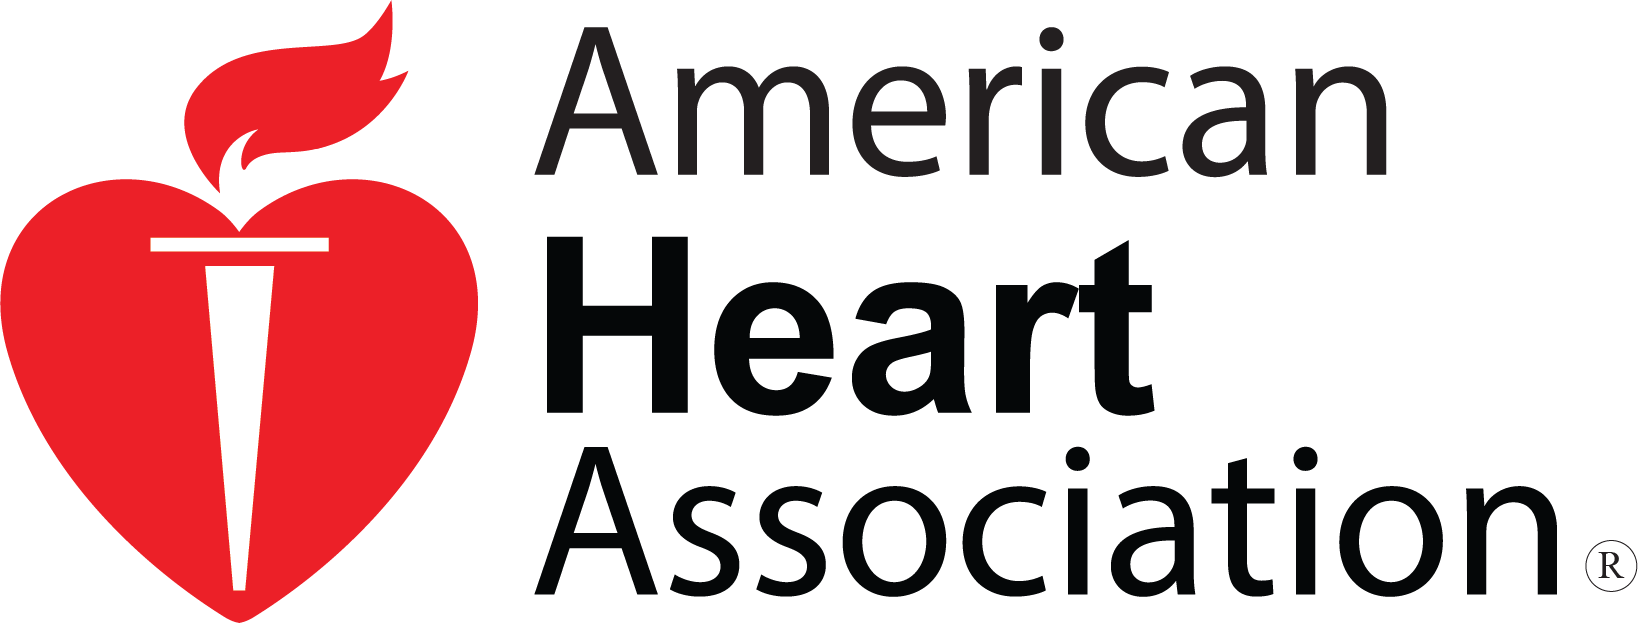 American-Heart-Association-1.png